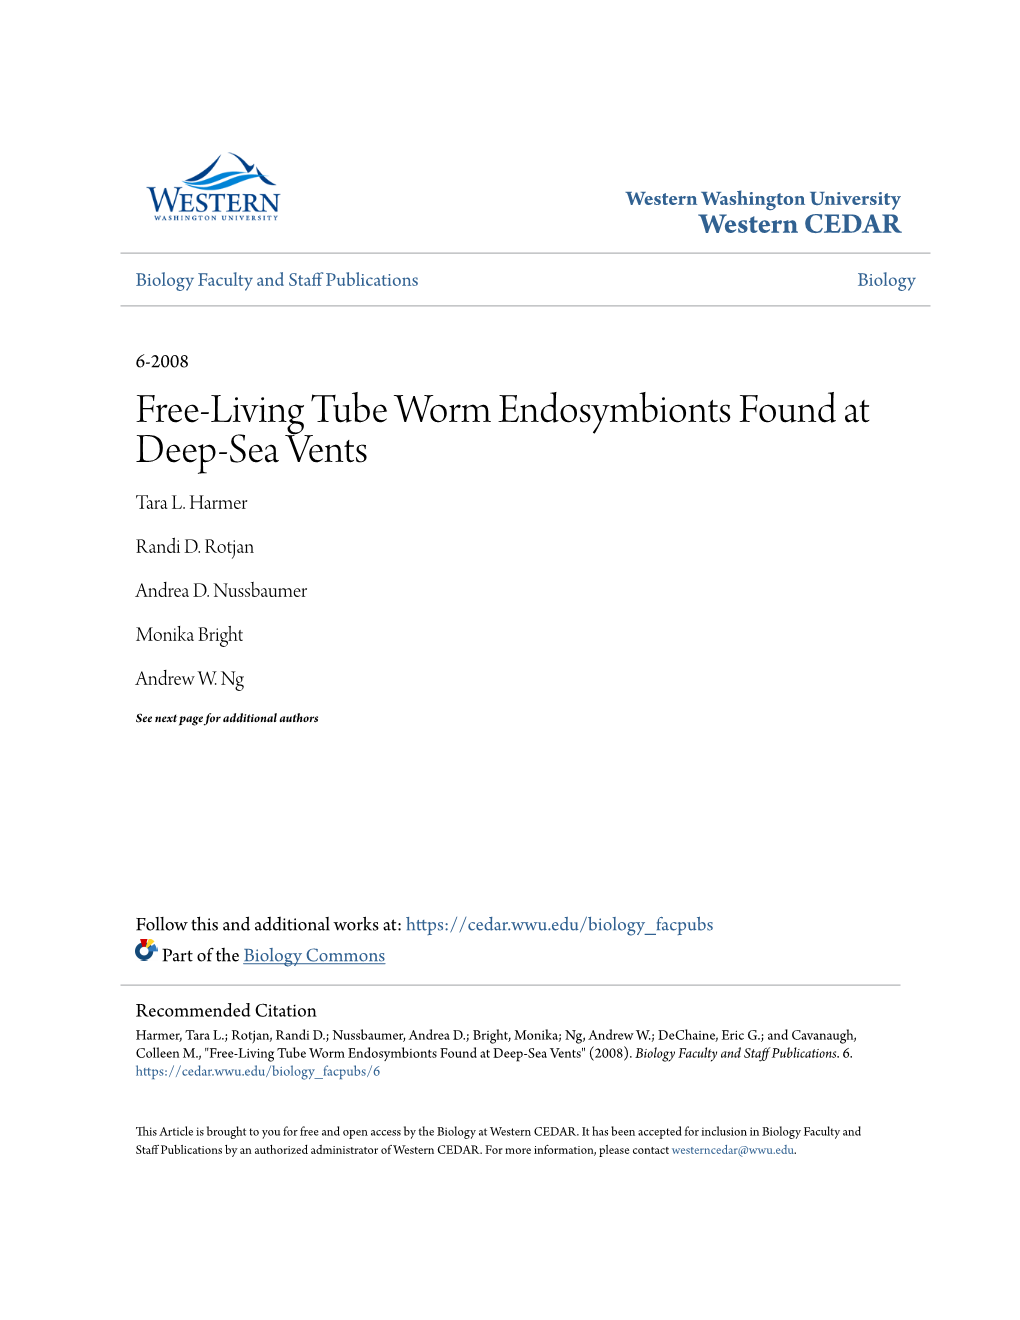 Free-Living Tube Worm Endosymbionts Found at Deep-Sea Vents Tara L